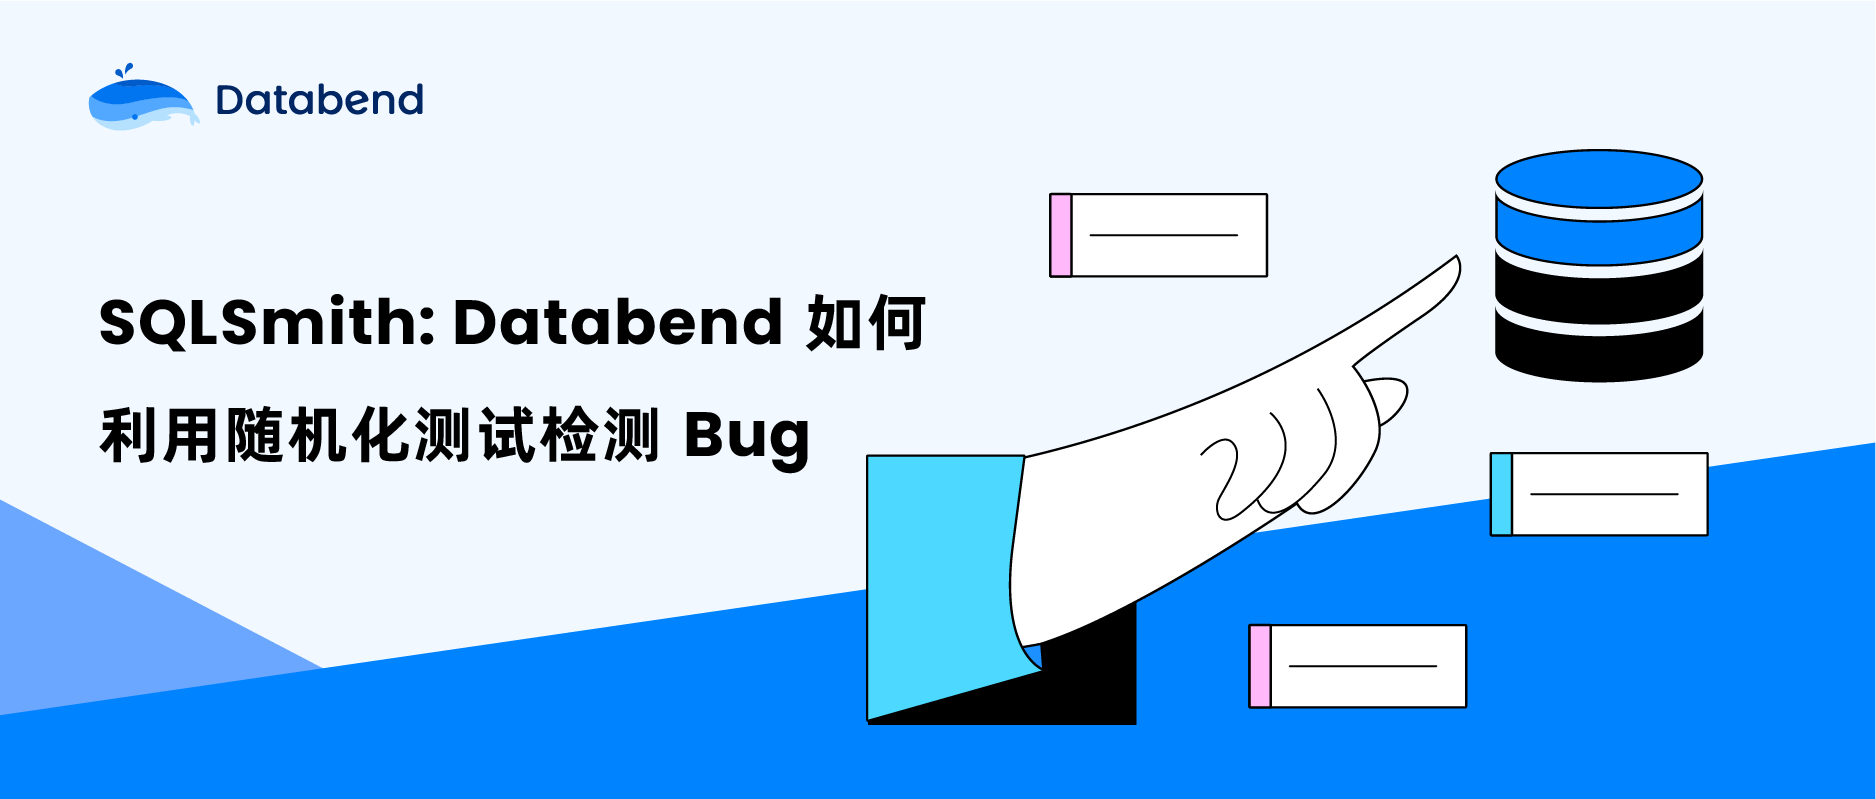 SQLSmith: Databend 如何利用随机化测试检测 Bug